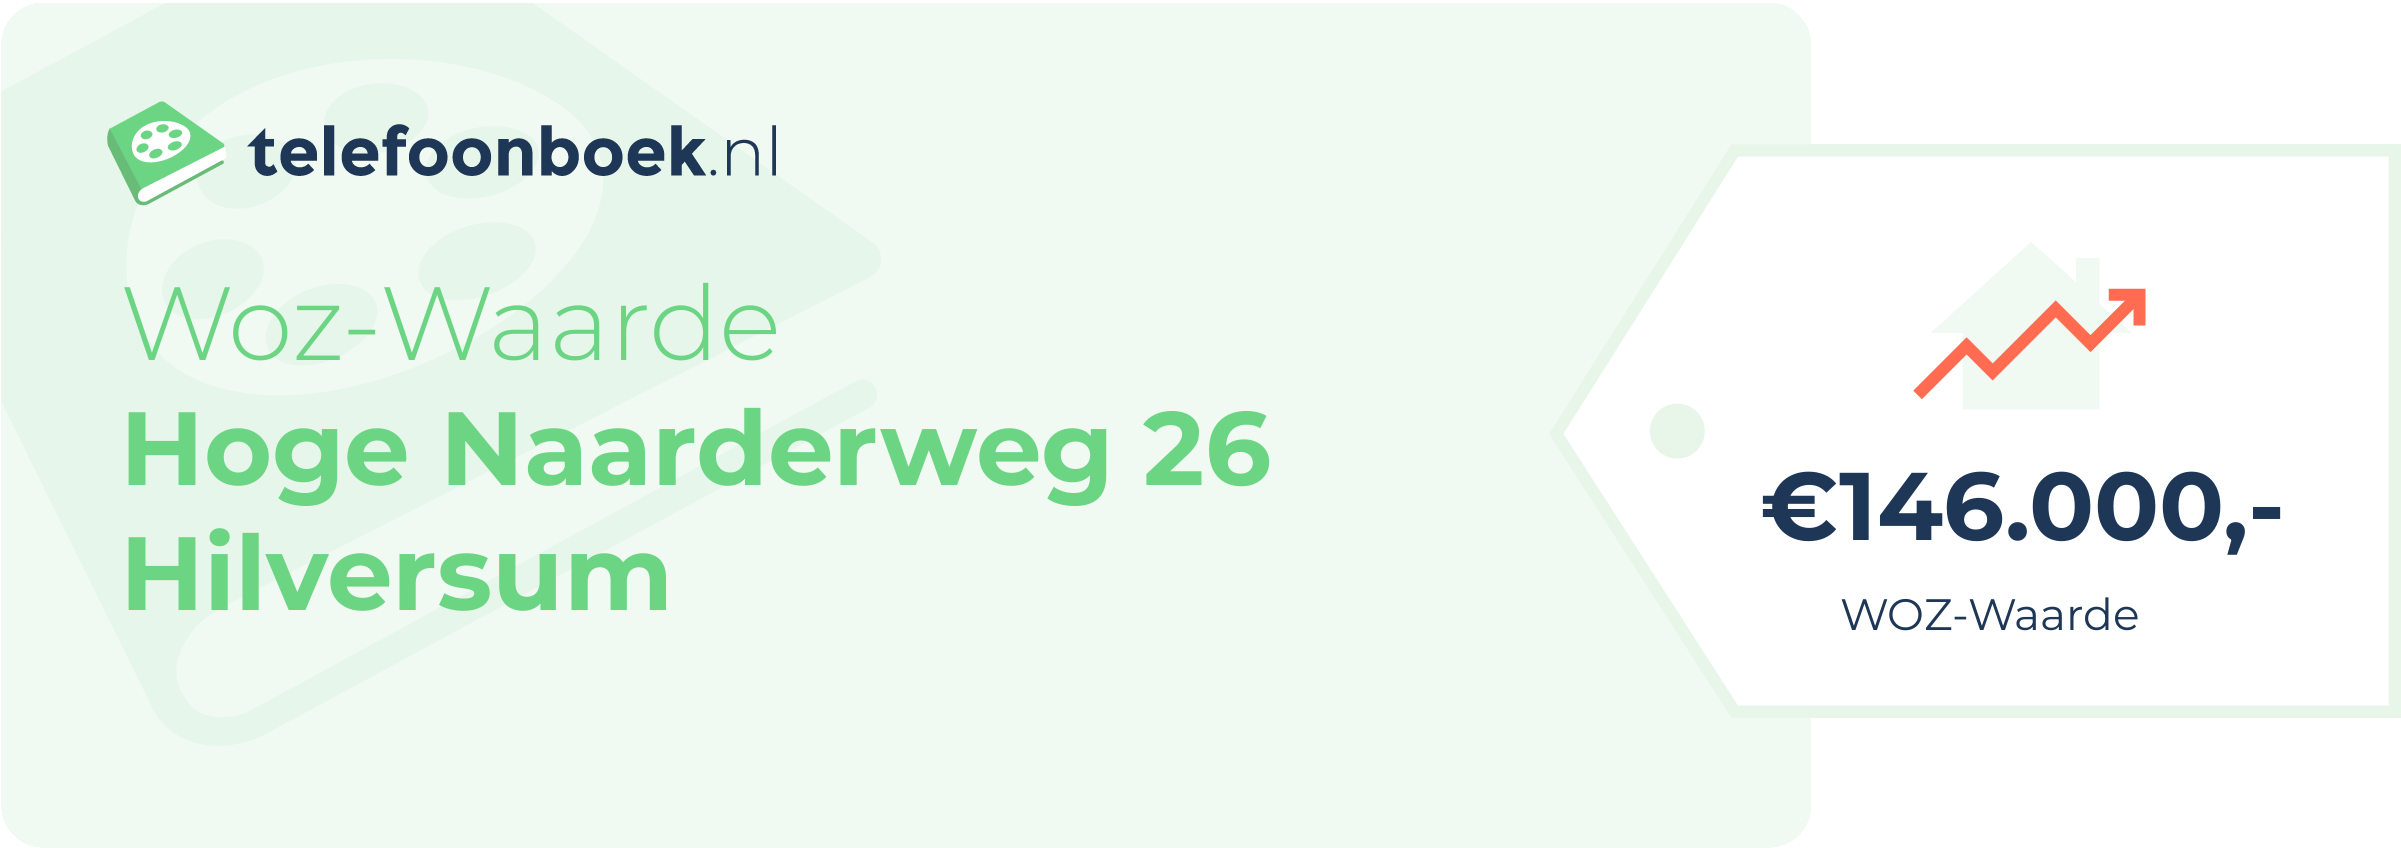 WOZ-waarde Hoge Naarderweg 26 Hilversum